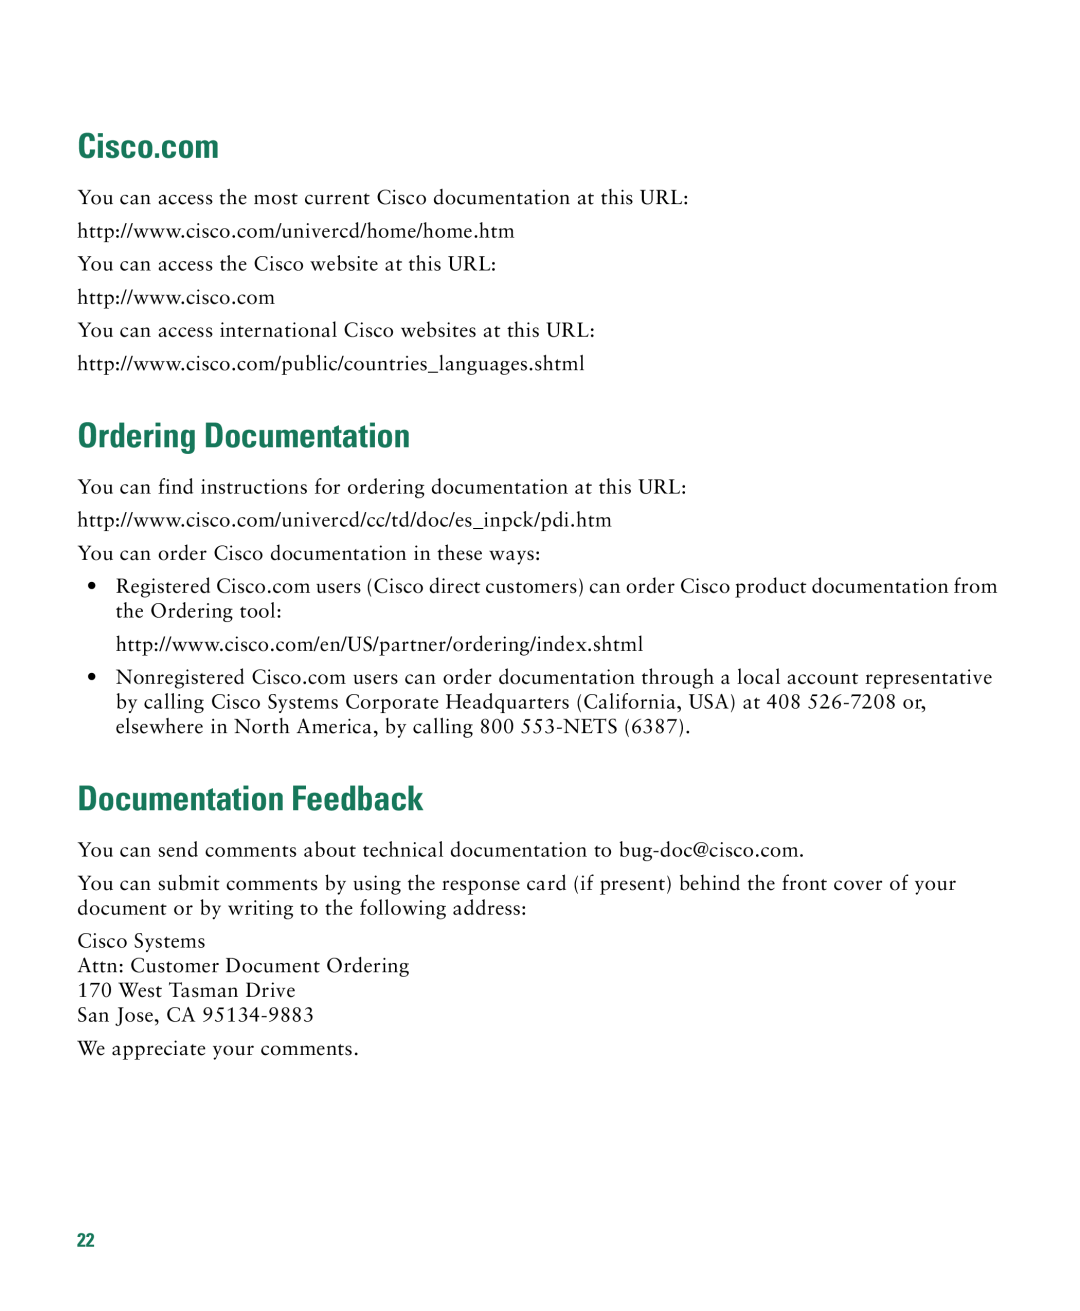 Cisco Systems CATALYST 2950 manual Cisco.com, Ordering Documentation, Documentation Feedback 